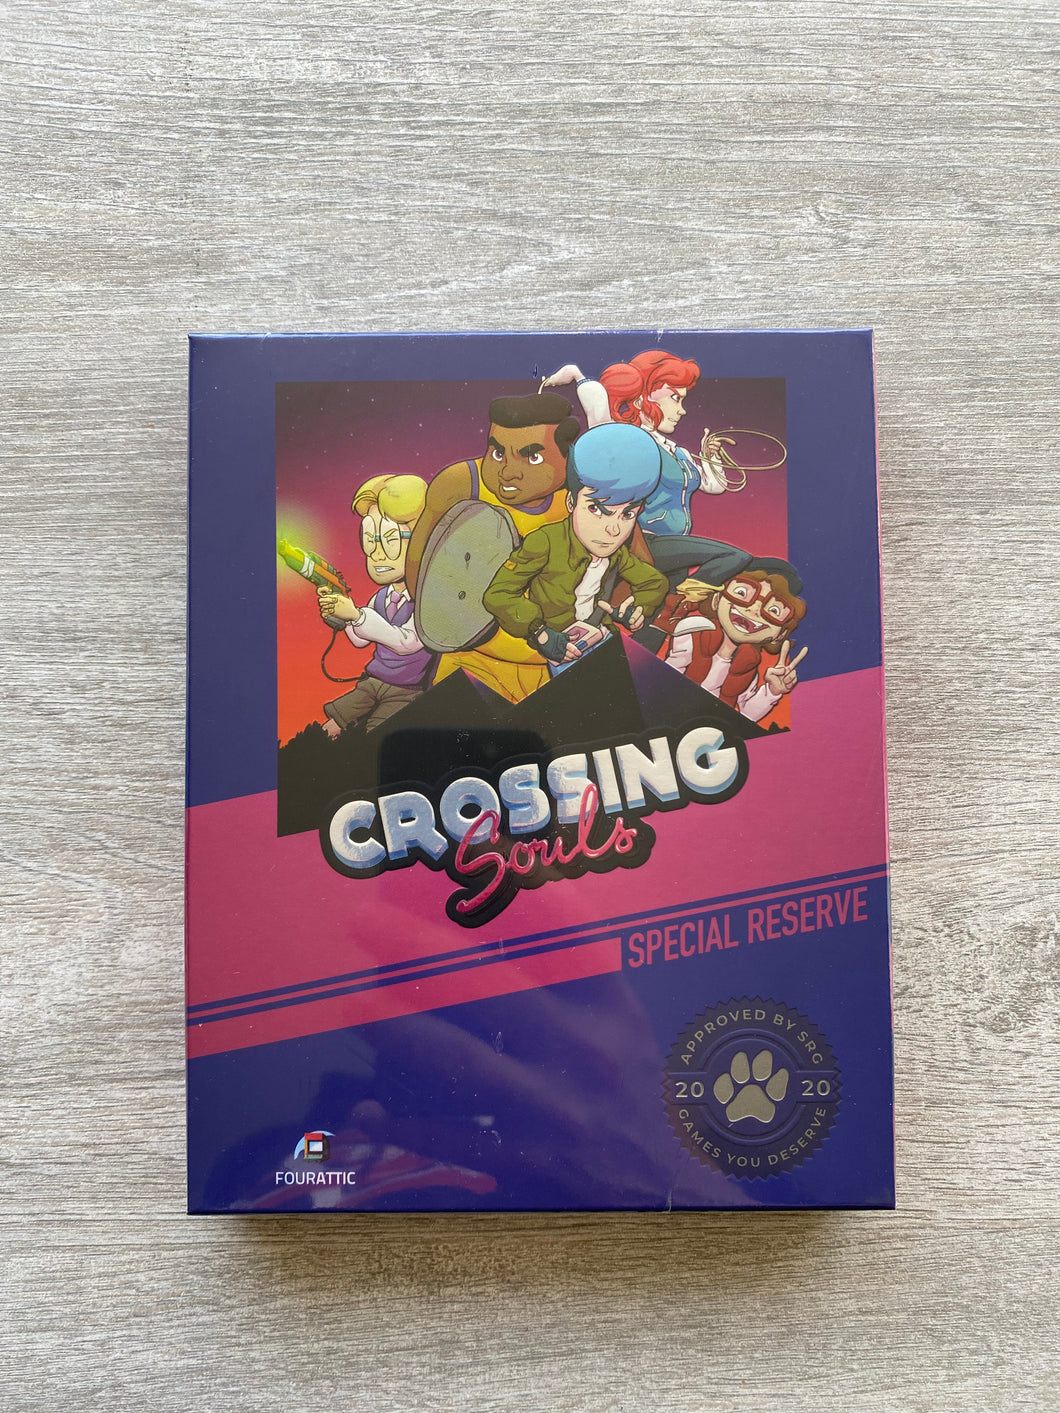 Crossing souls SCS / Special reserve games / PS4 / 1000 copies